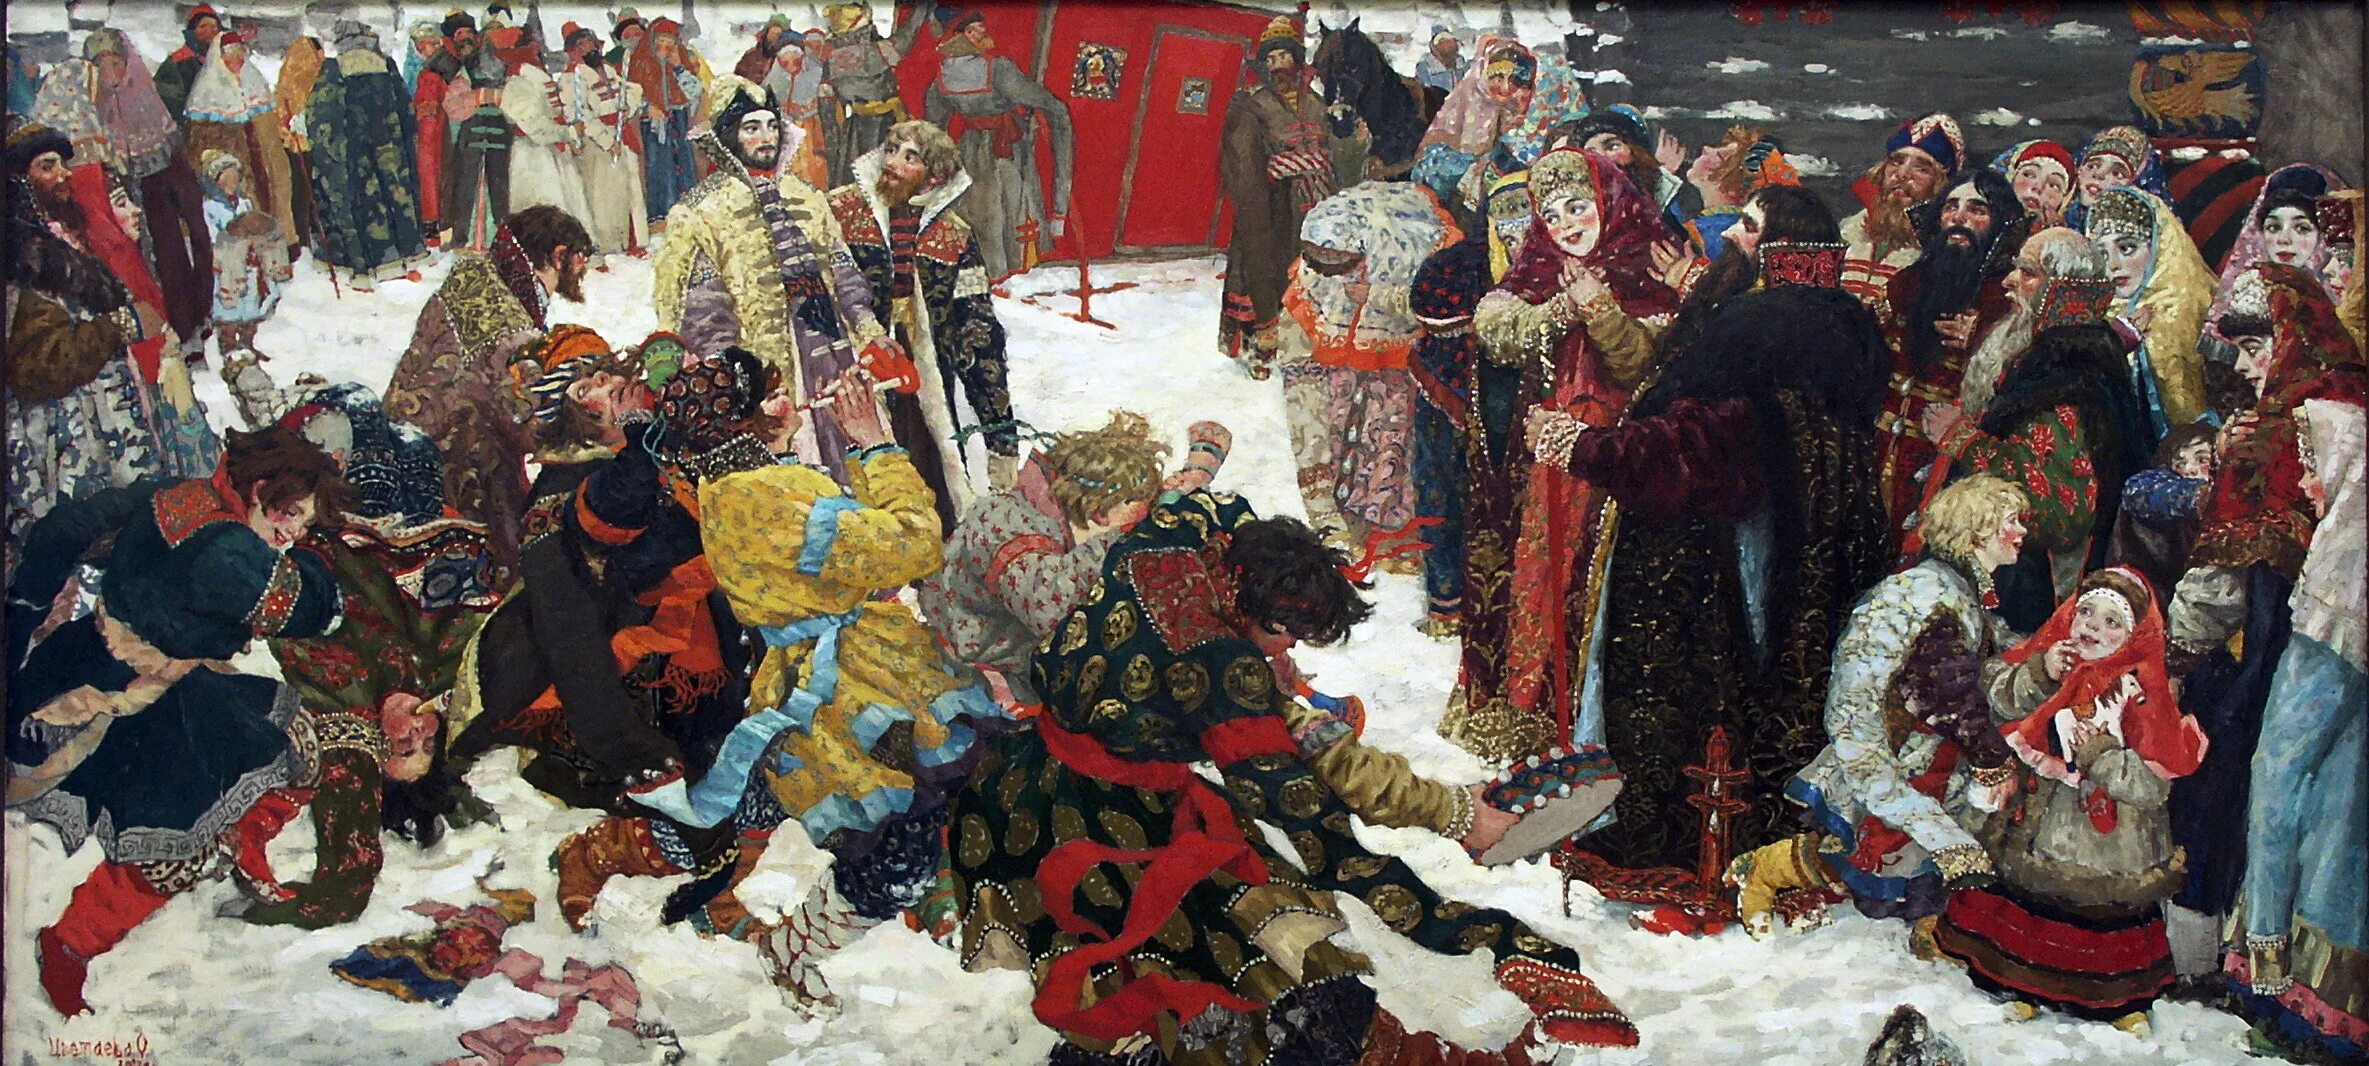 Моргун художник РАЖВИЗ. Васнецов базар 17 век.